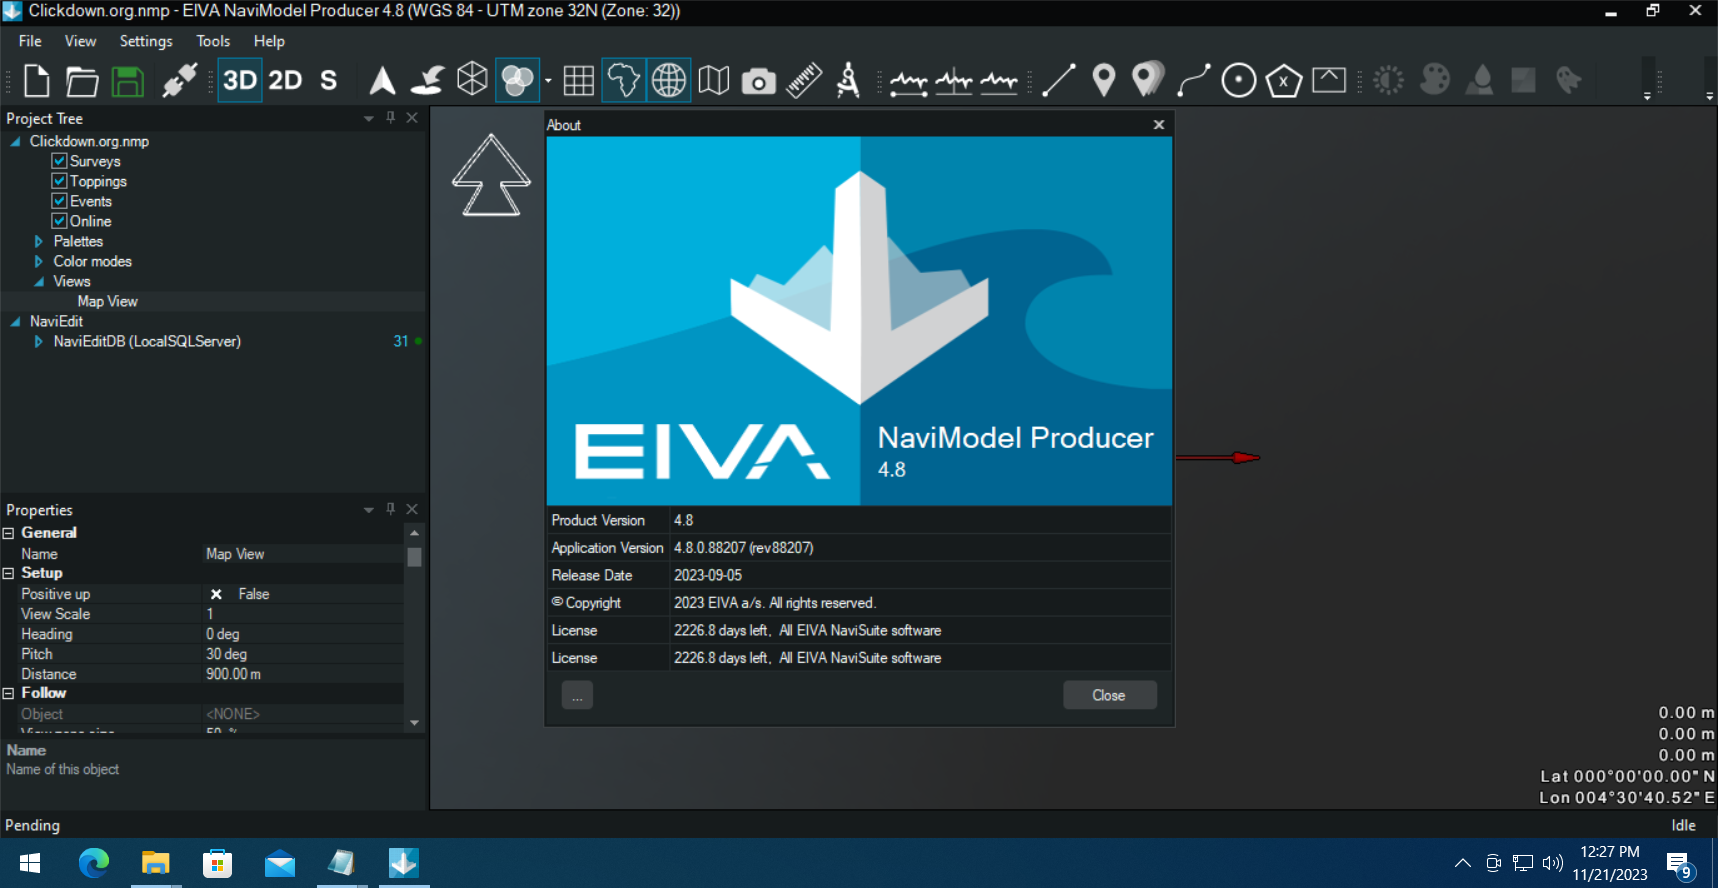 Working with EIVA NaviModel Producer 4.8 full license